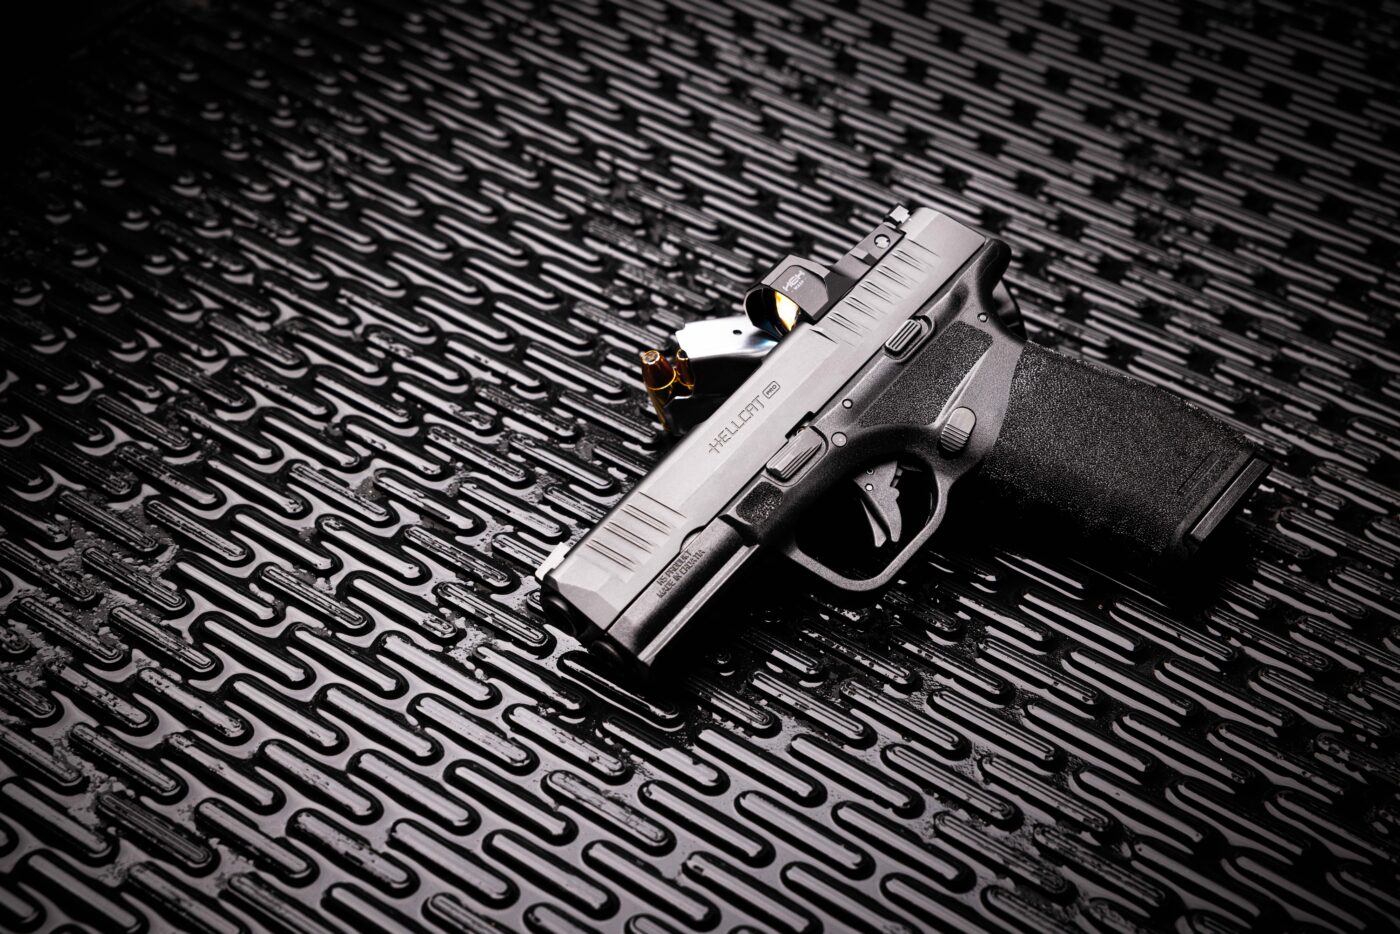 Springfield Hellcat Pro pistol resting on loaded magazine